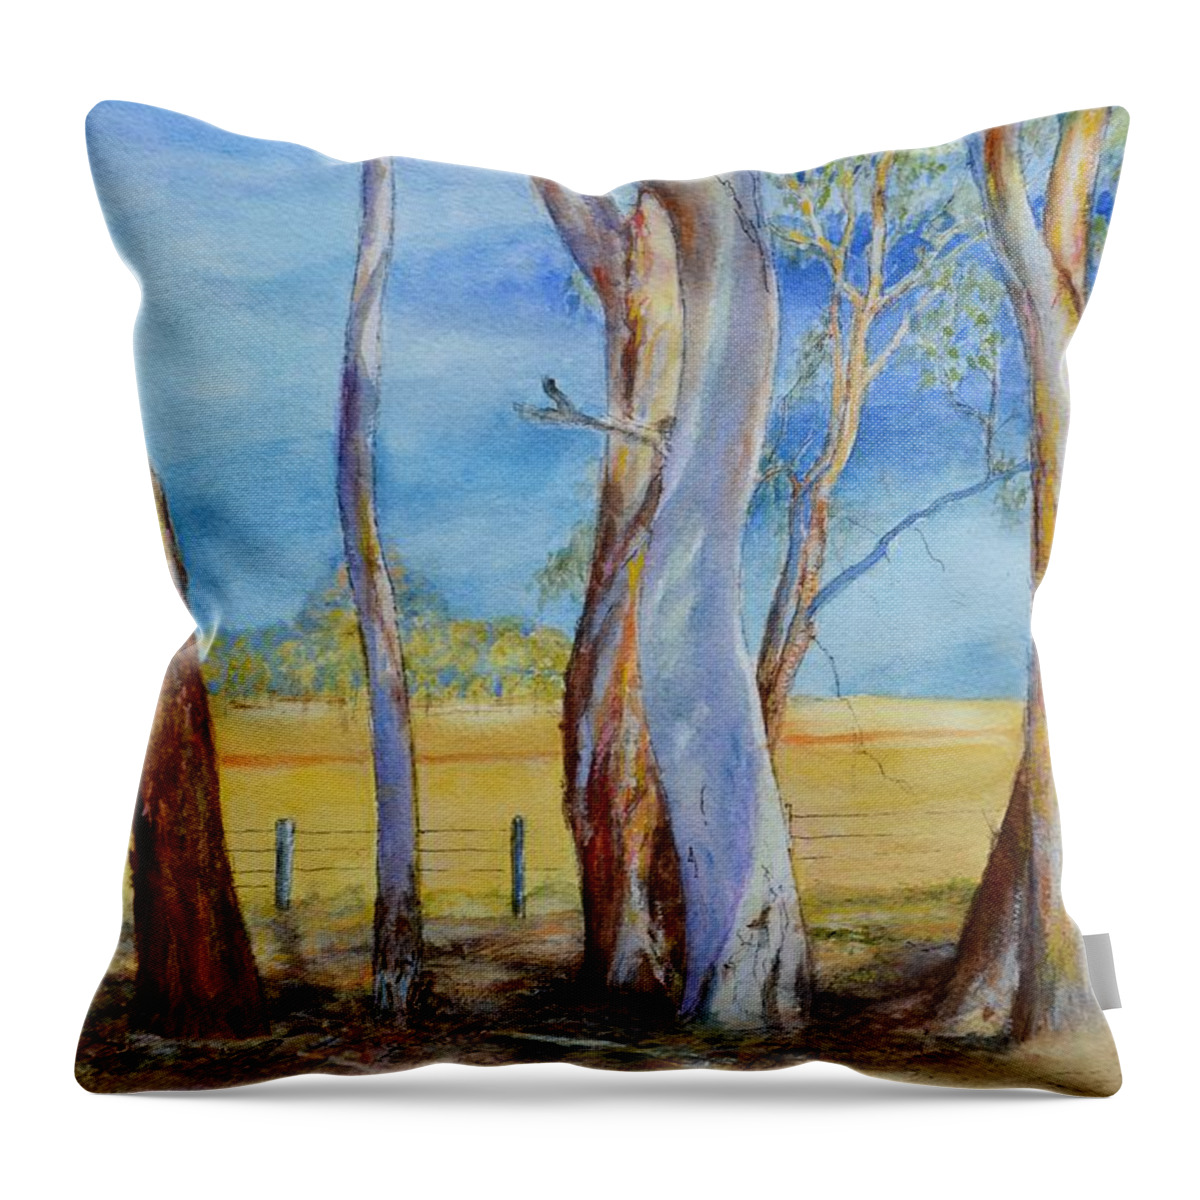 Gums Throw Pillow featuring the painting Roadside Eucalyptus Trees near Maldon by Dai Wynn